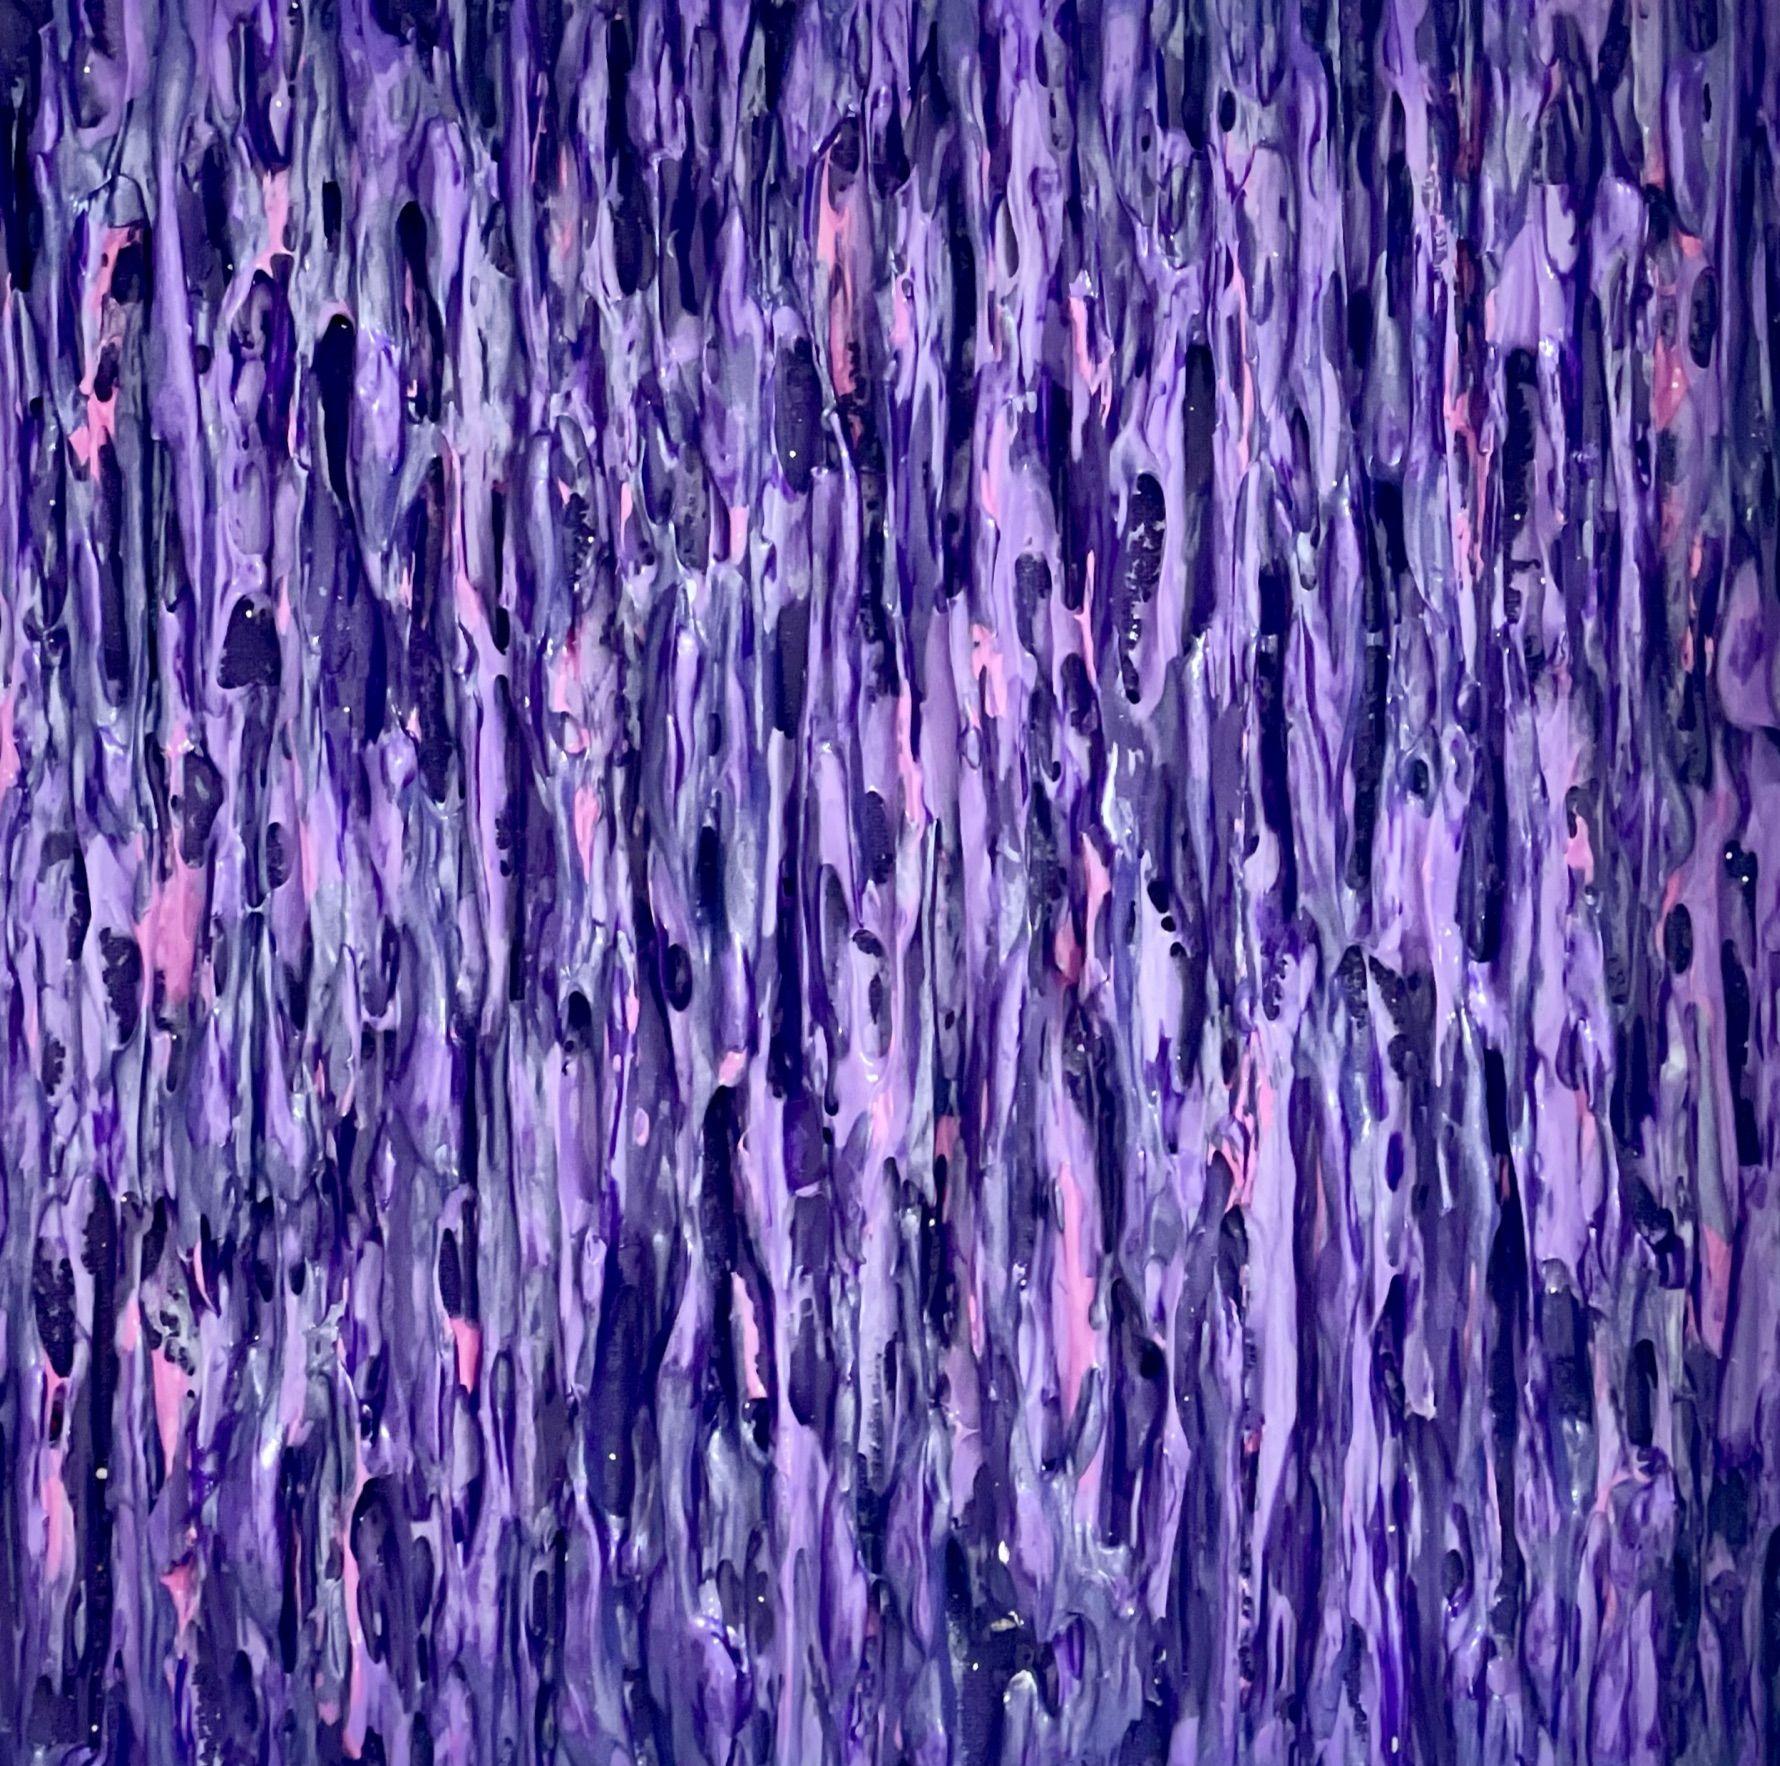 Melodie Monocromatiche - Purple Rain, Mixed Media on Canvas - Mixed Media Art by Daniela Pasqualini